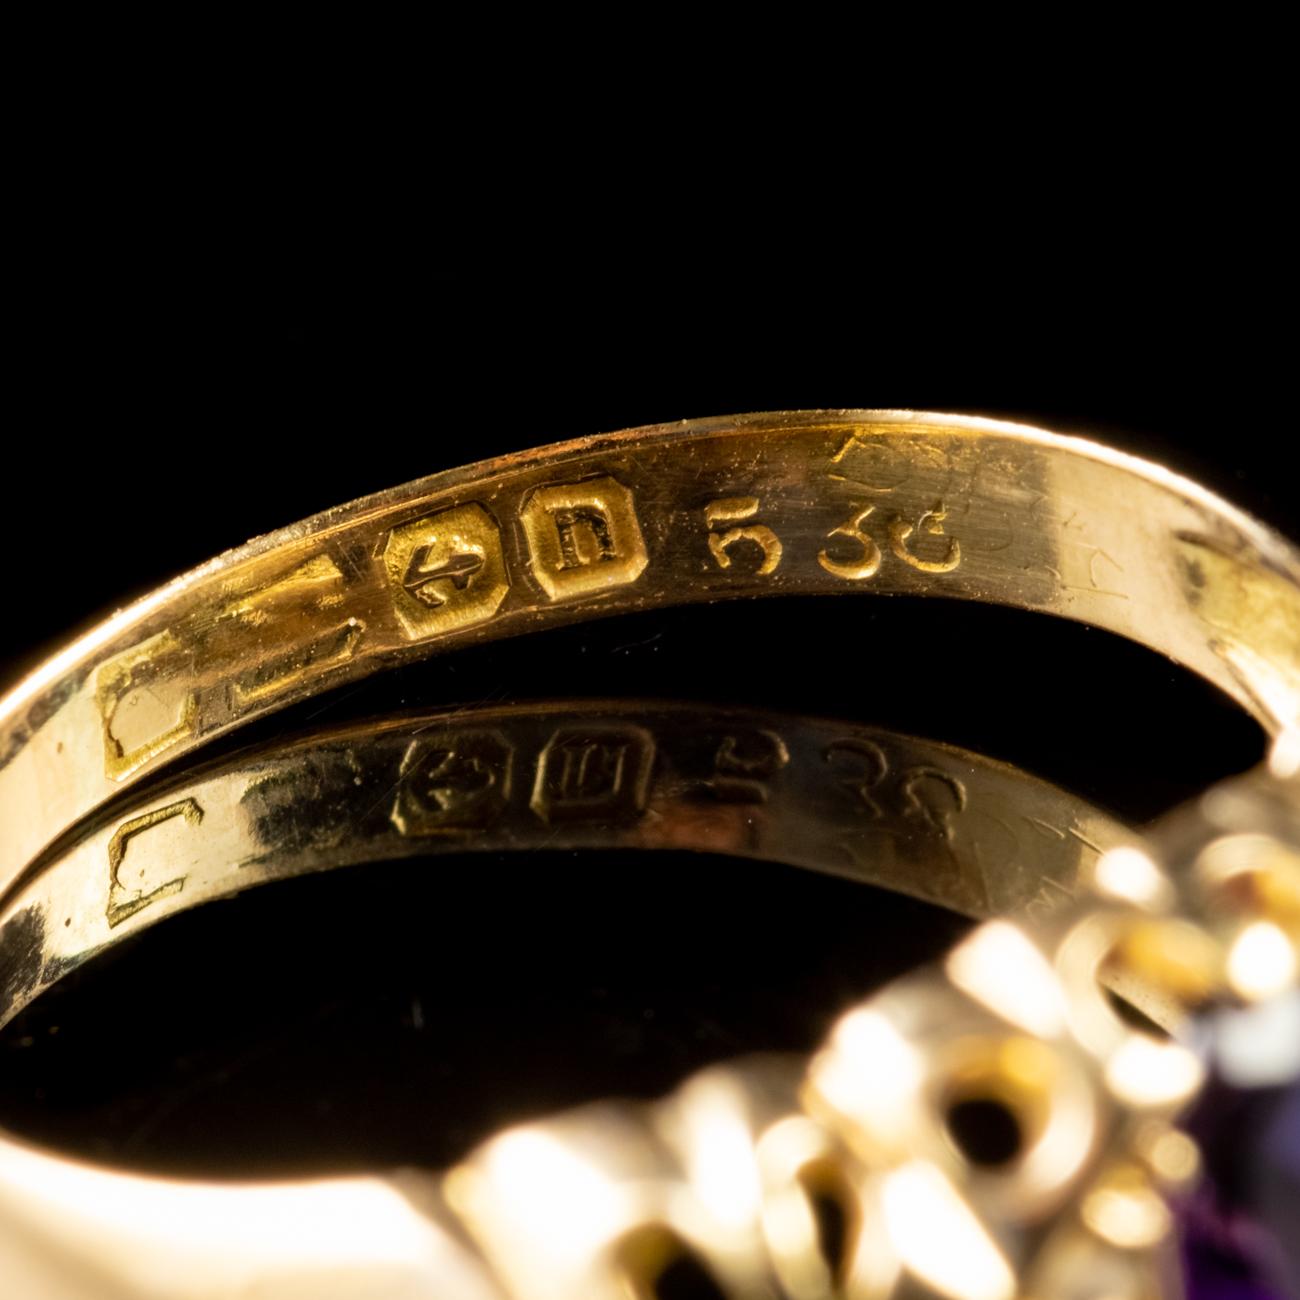 Antique Edwardian Suffragette Ring 15 Carat Gold Dated 1912 For Sale 1